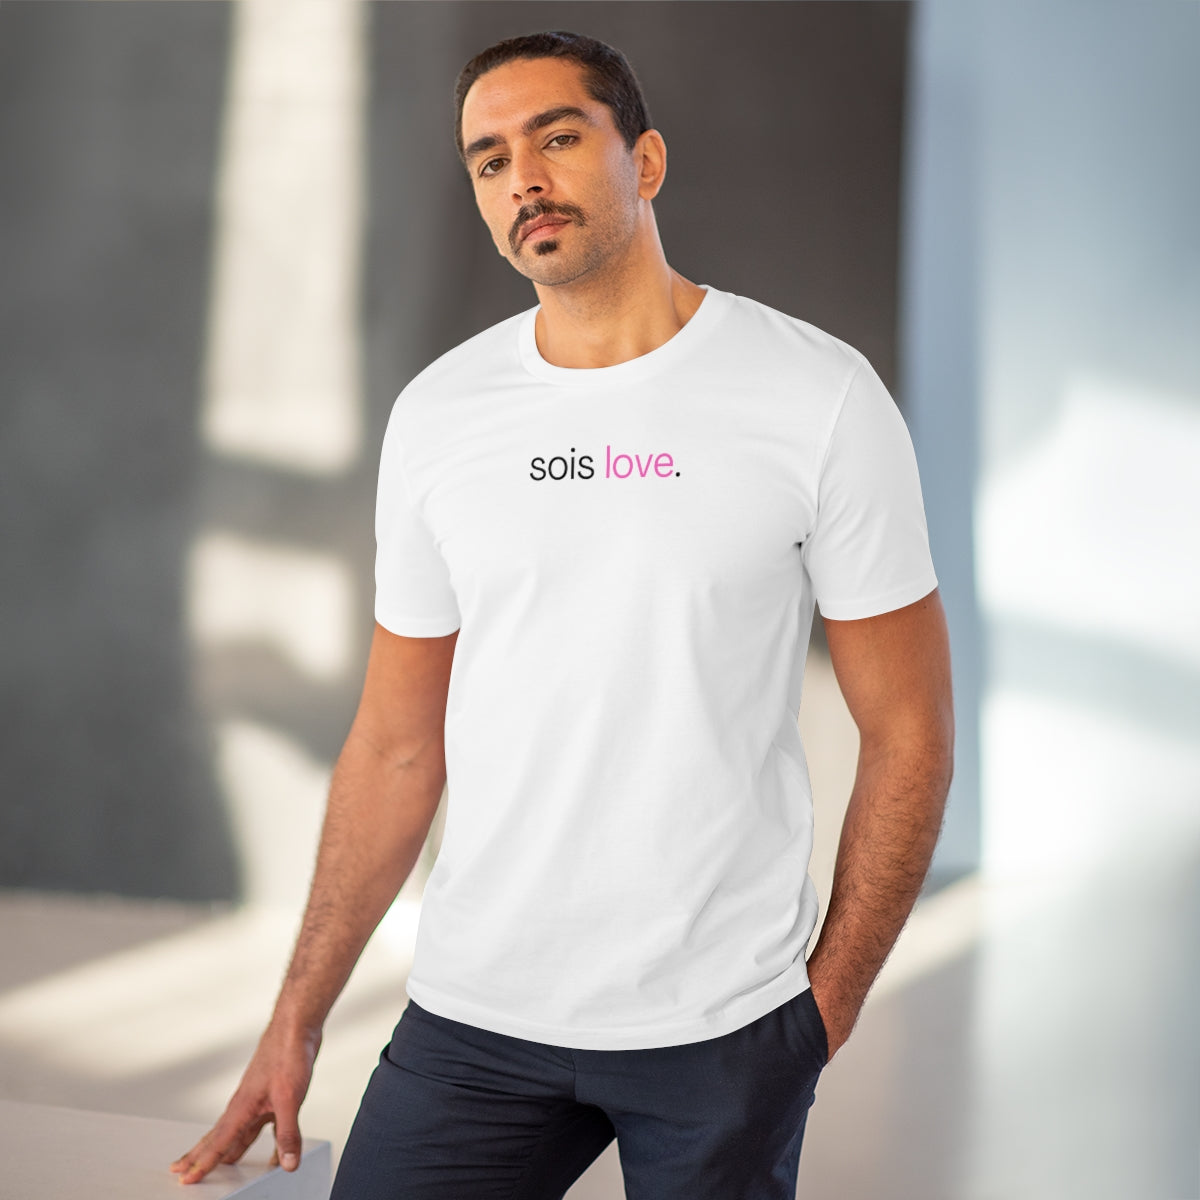 sois love. - Organic Creator T-shirt - Unisex